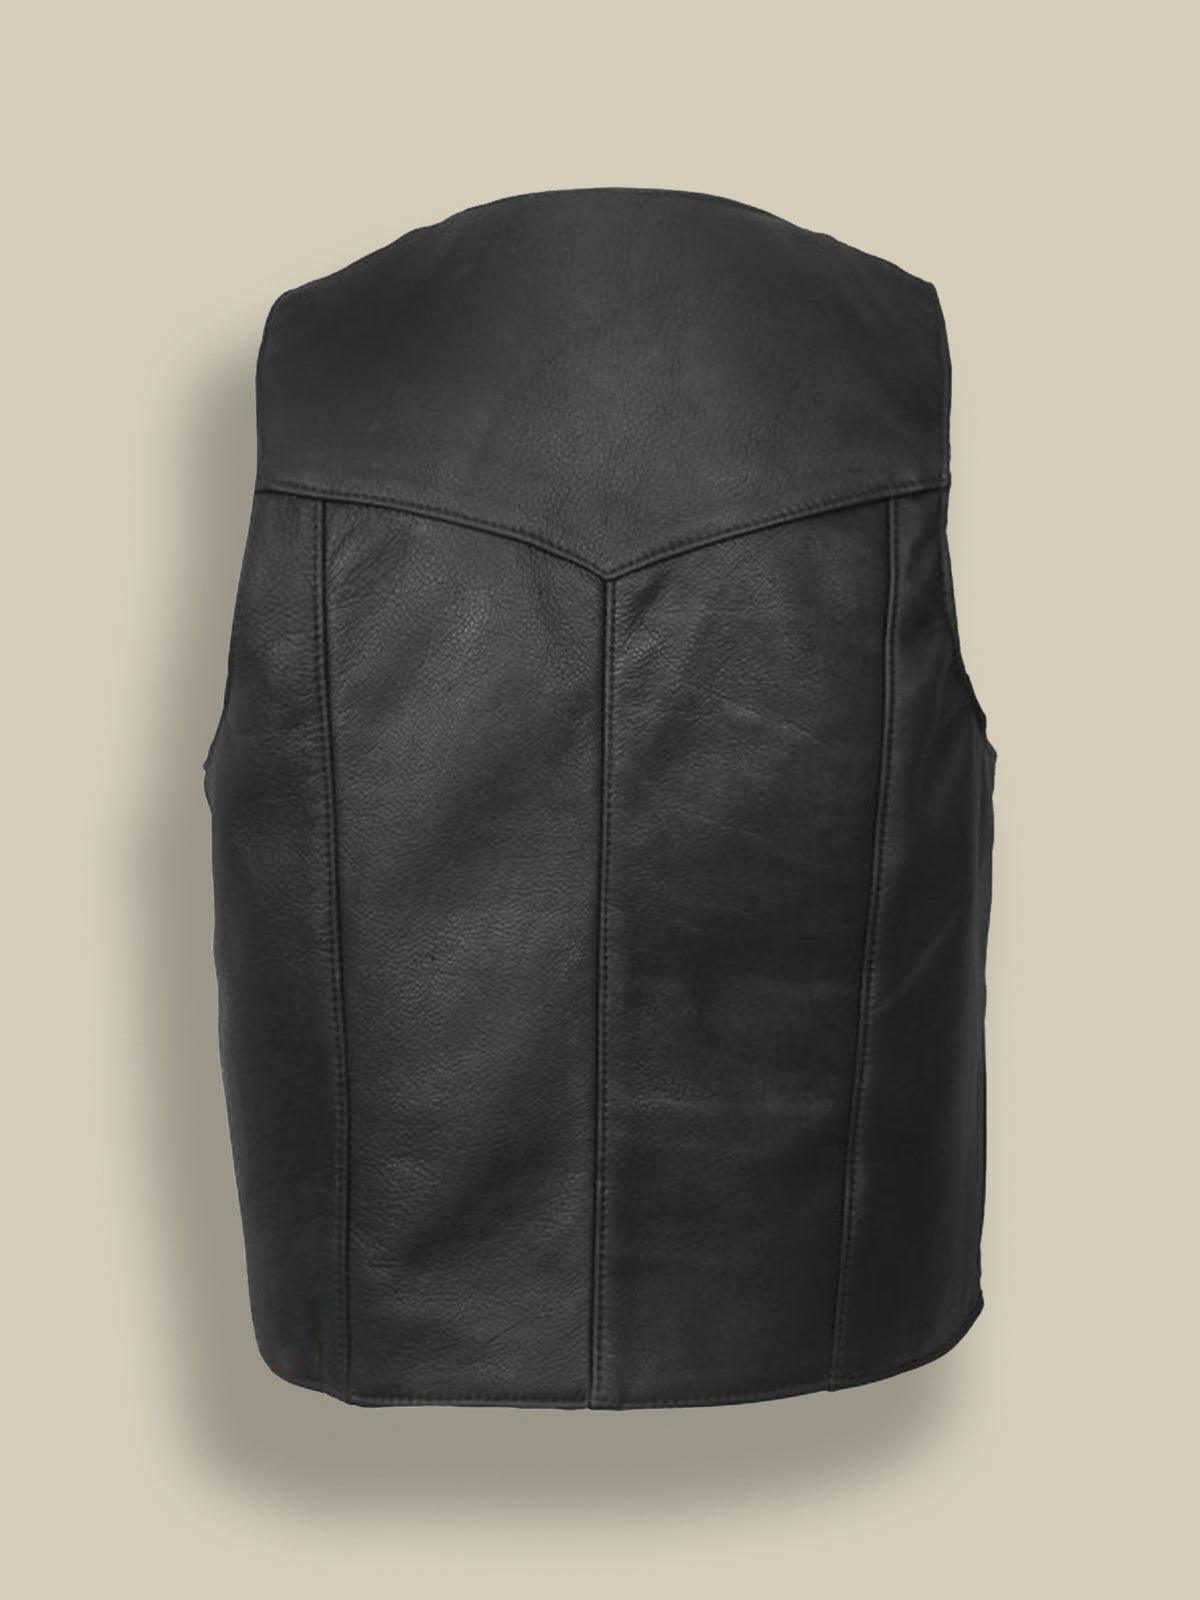 Men Premium Leather Vest - Leather Loom